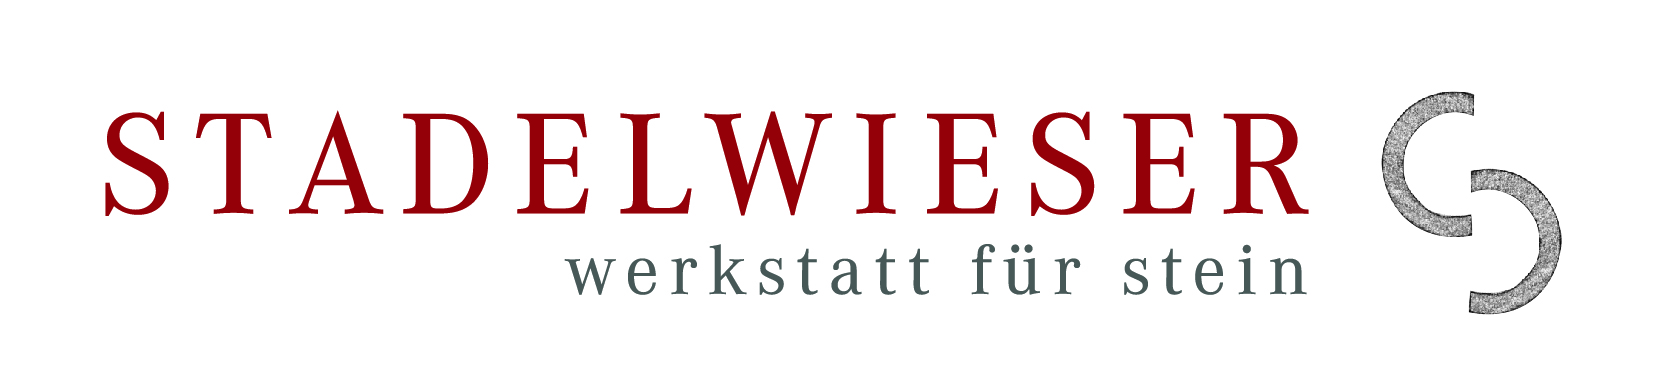 Stadelwieser Logo